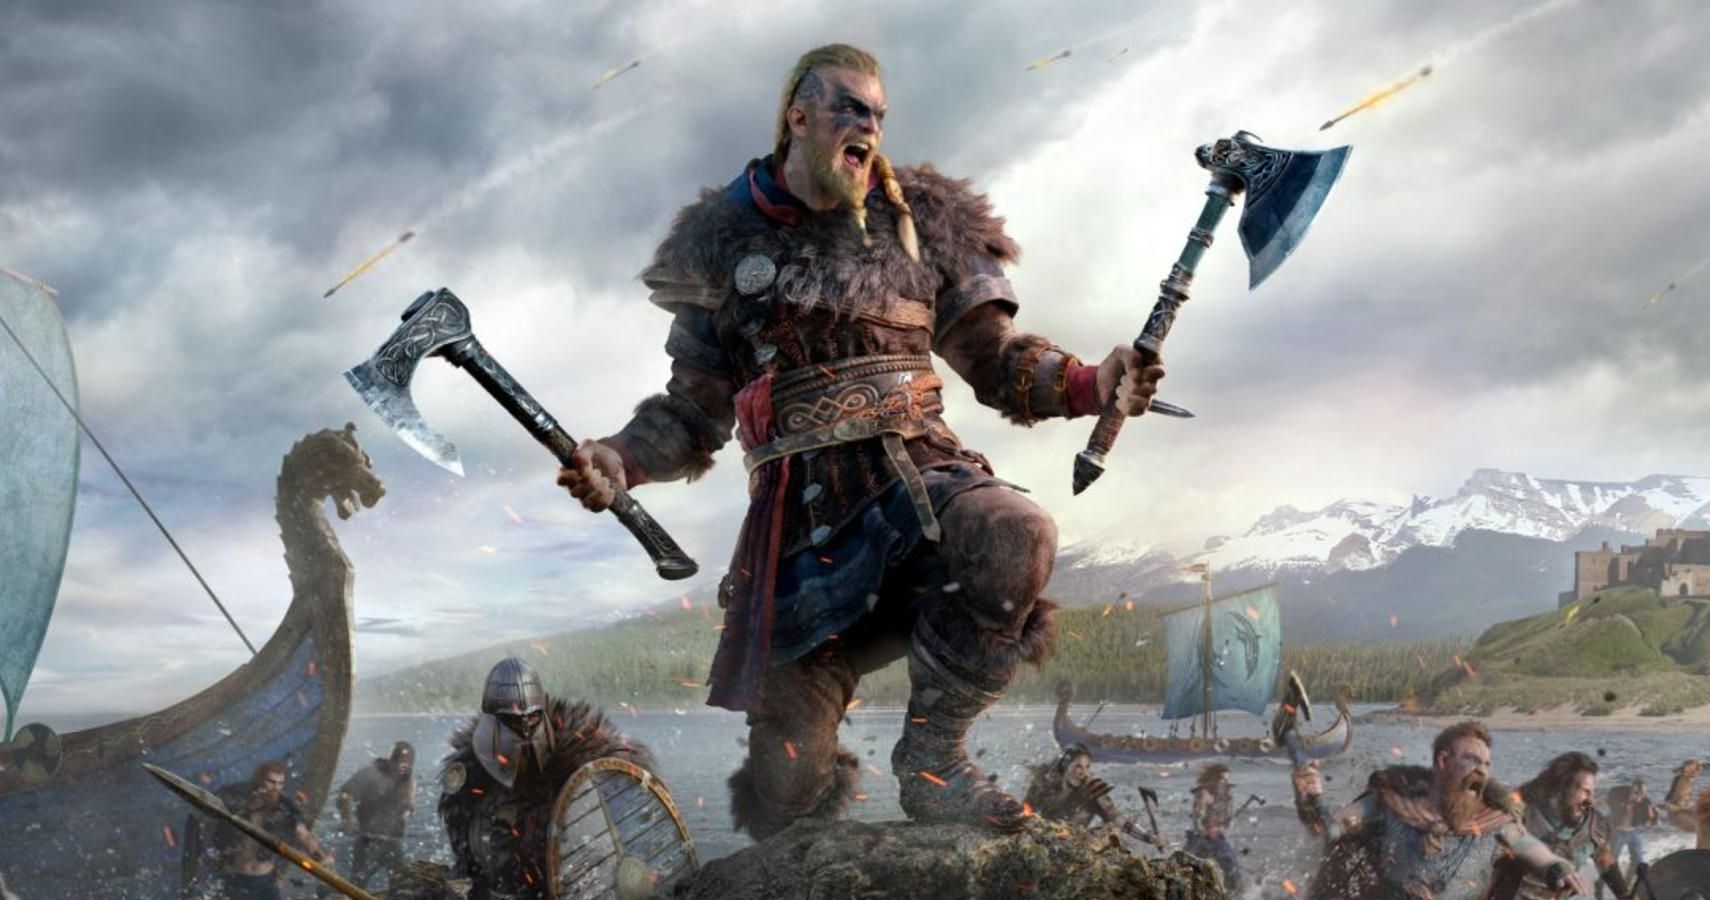 Main character leading vikings into battle